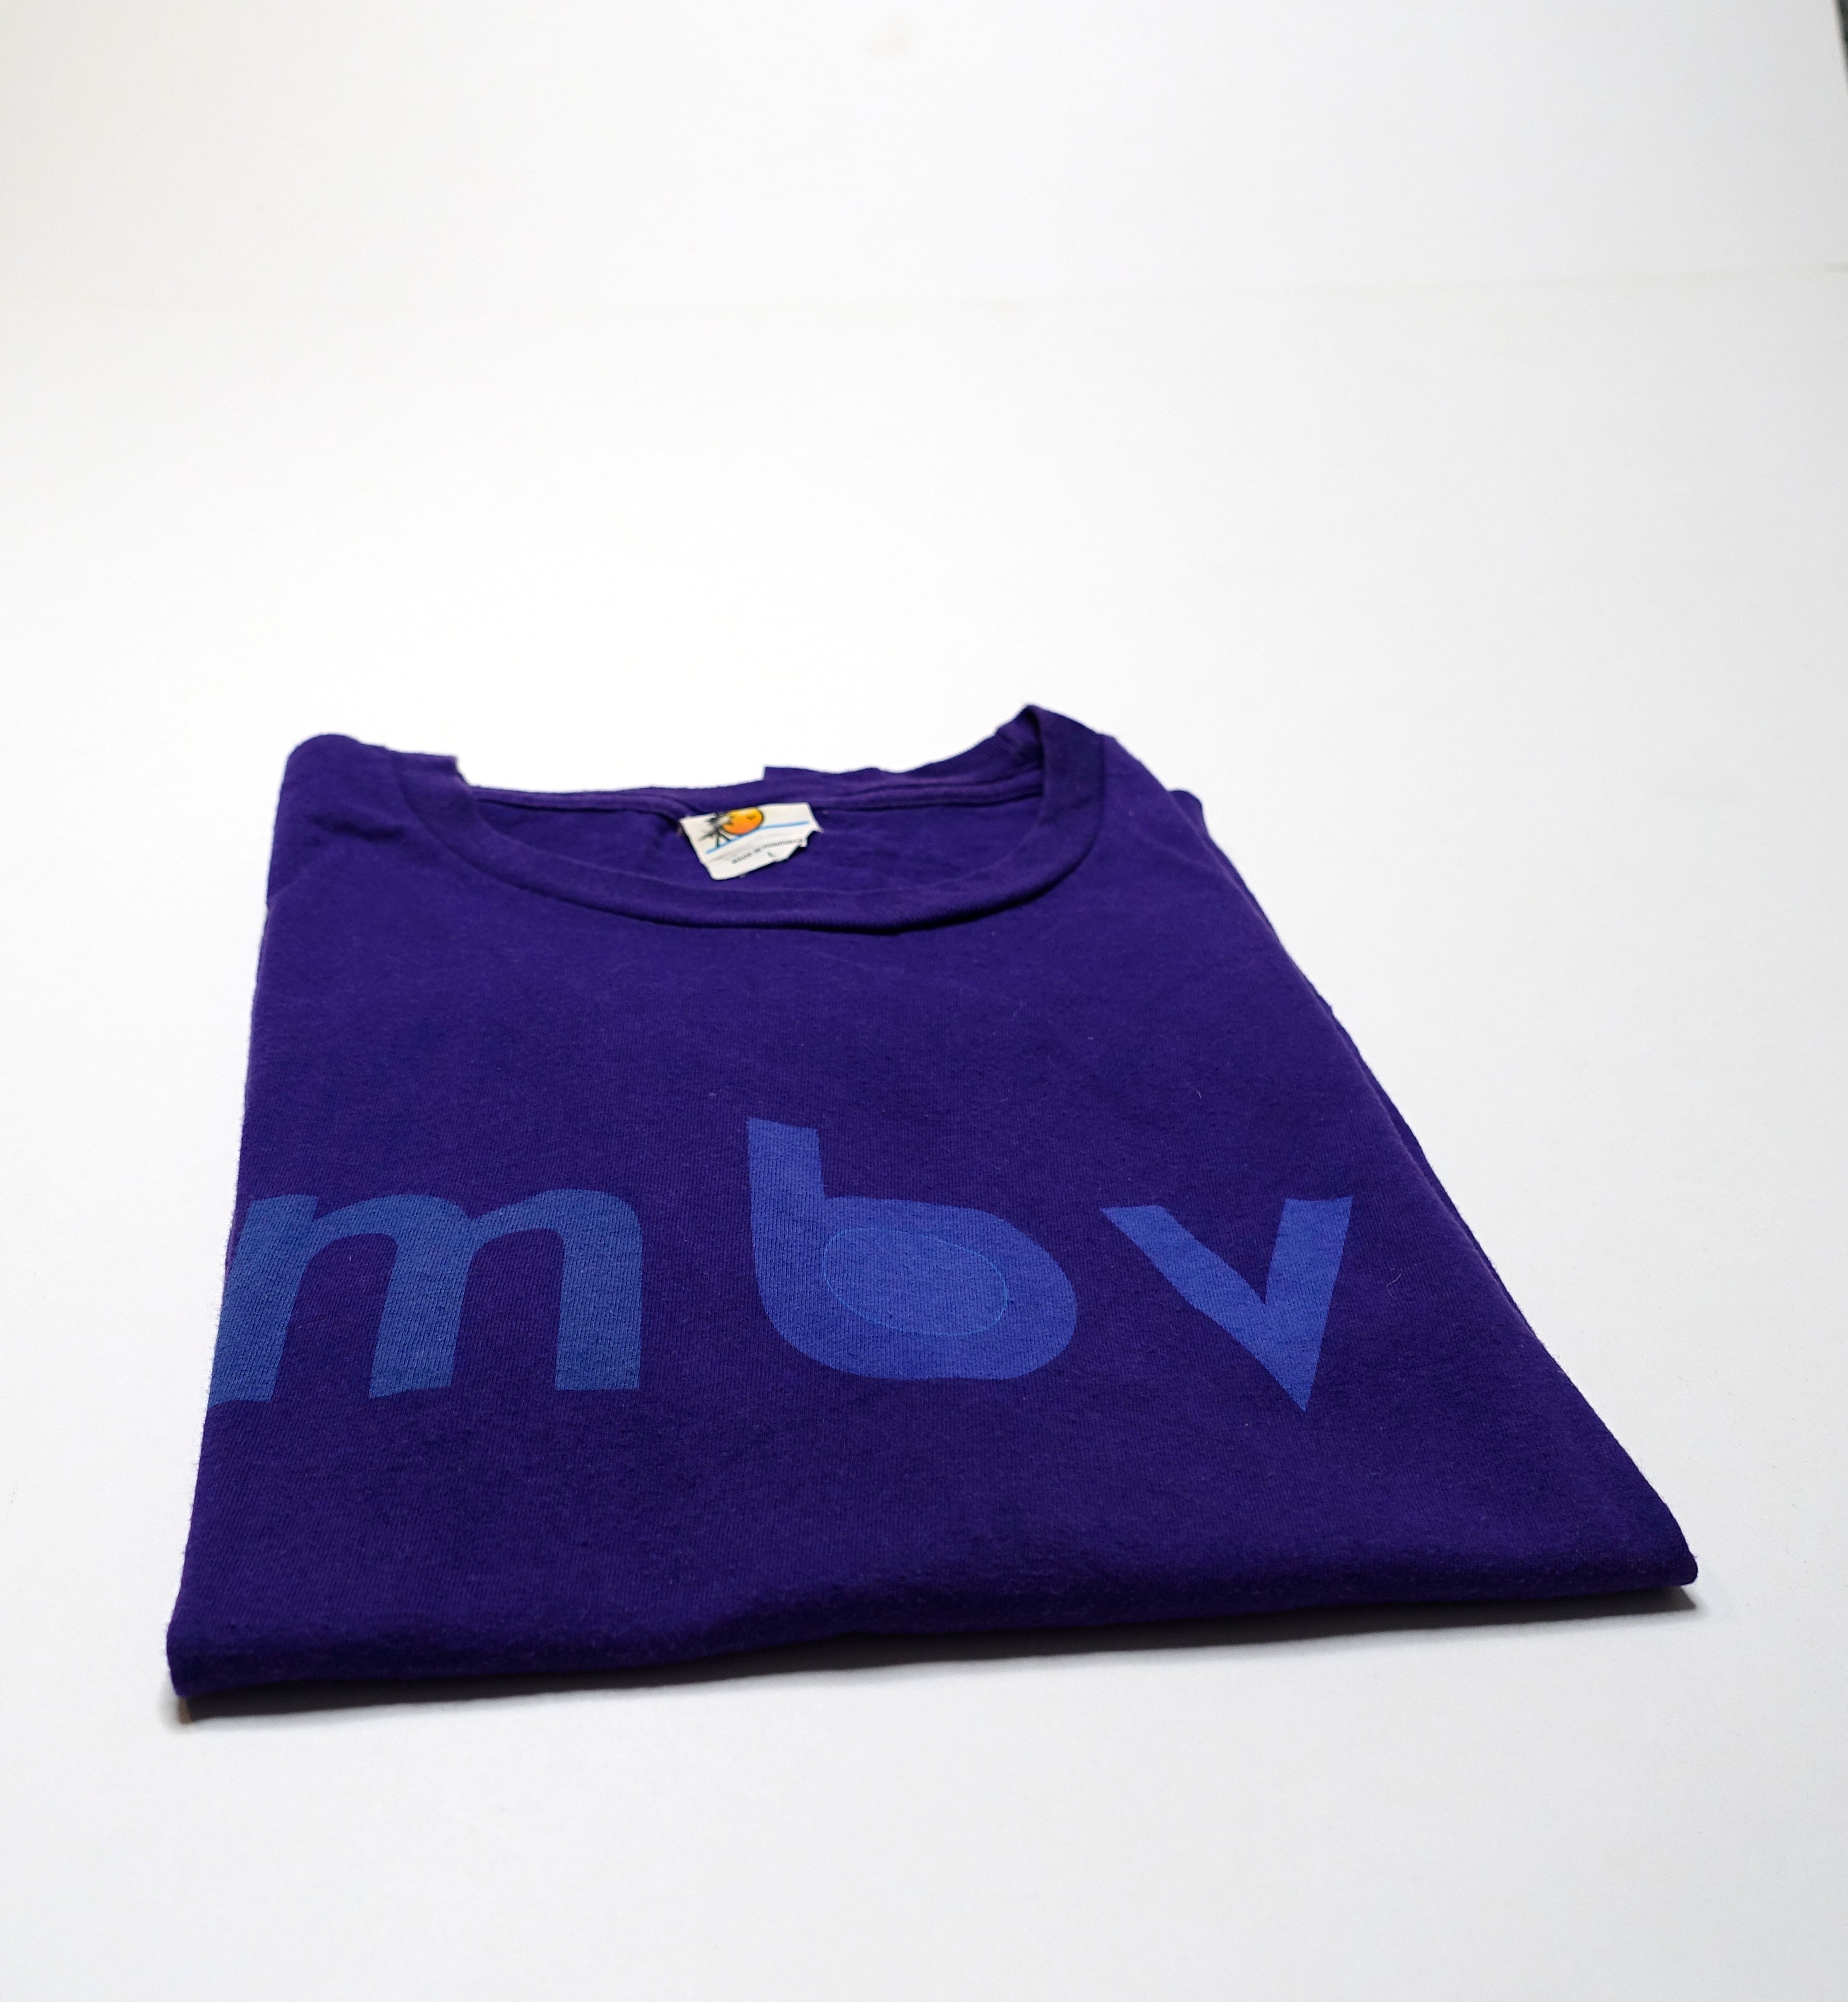 My Bloody Valentine - MBV 2009 Tour Shirt Size Large